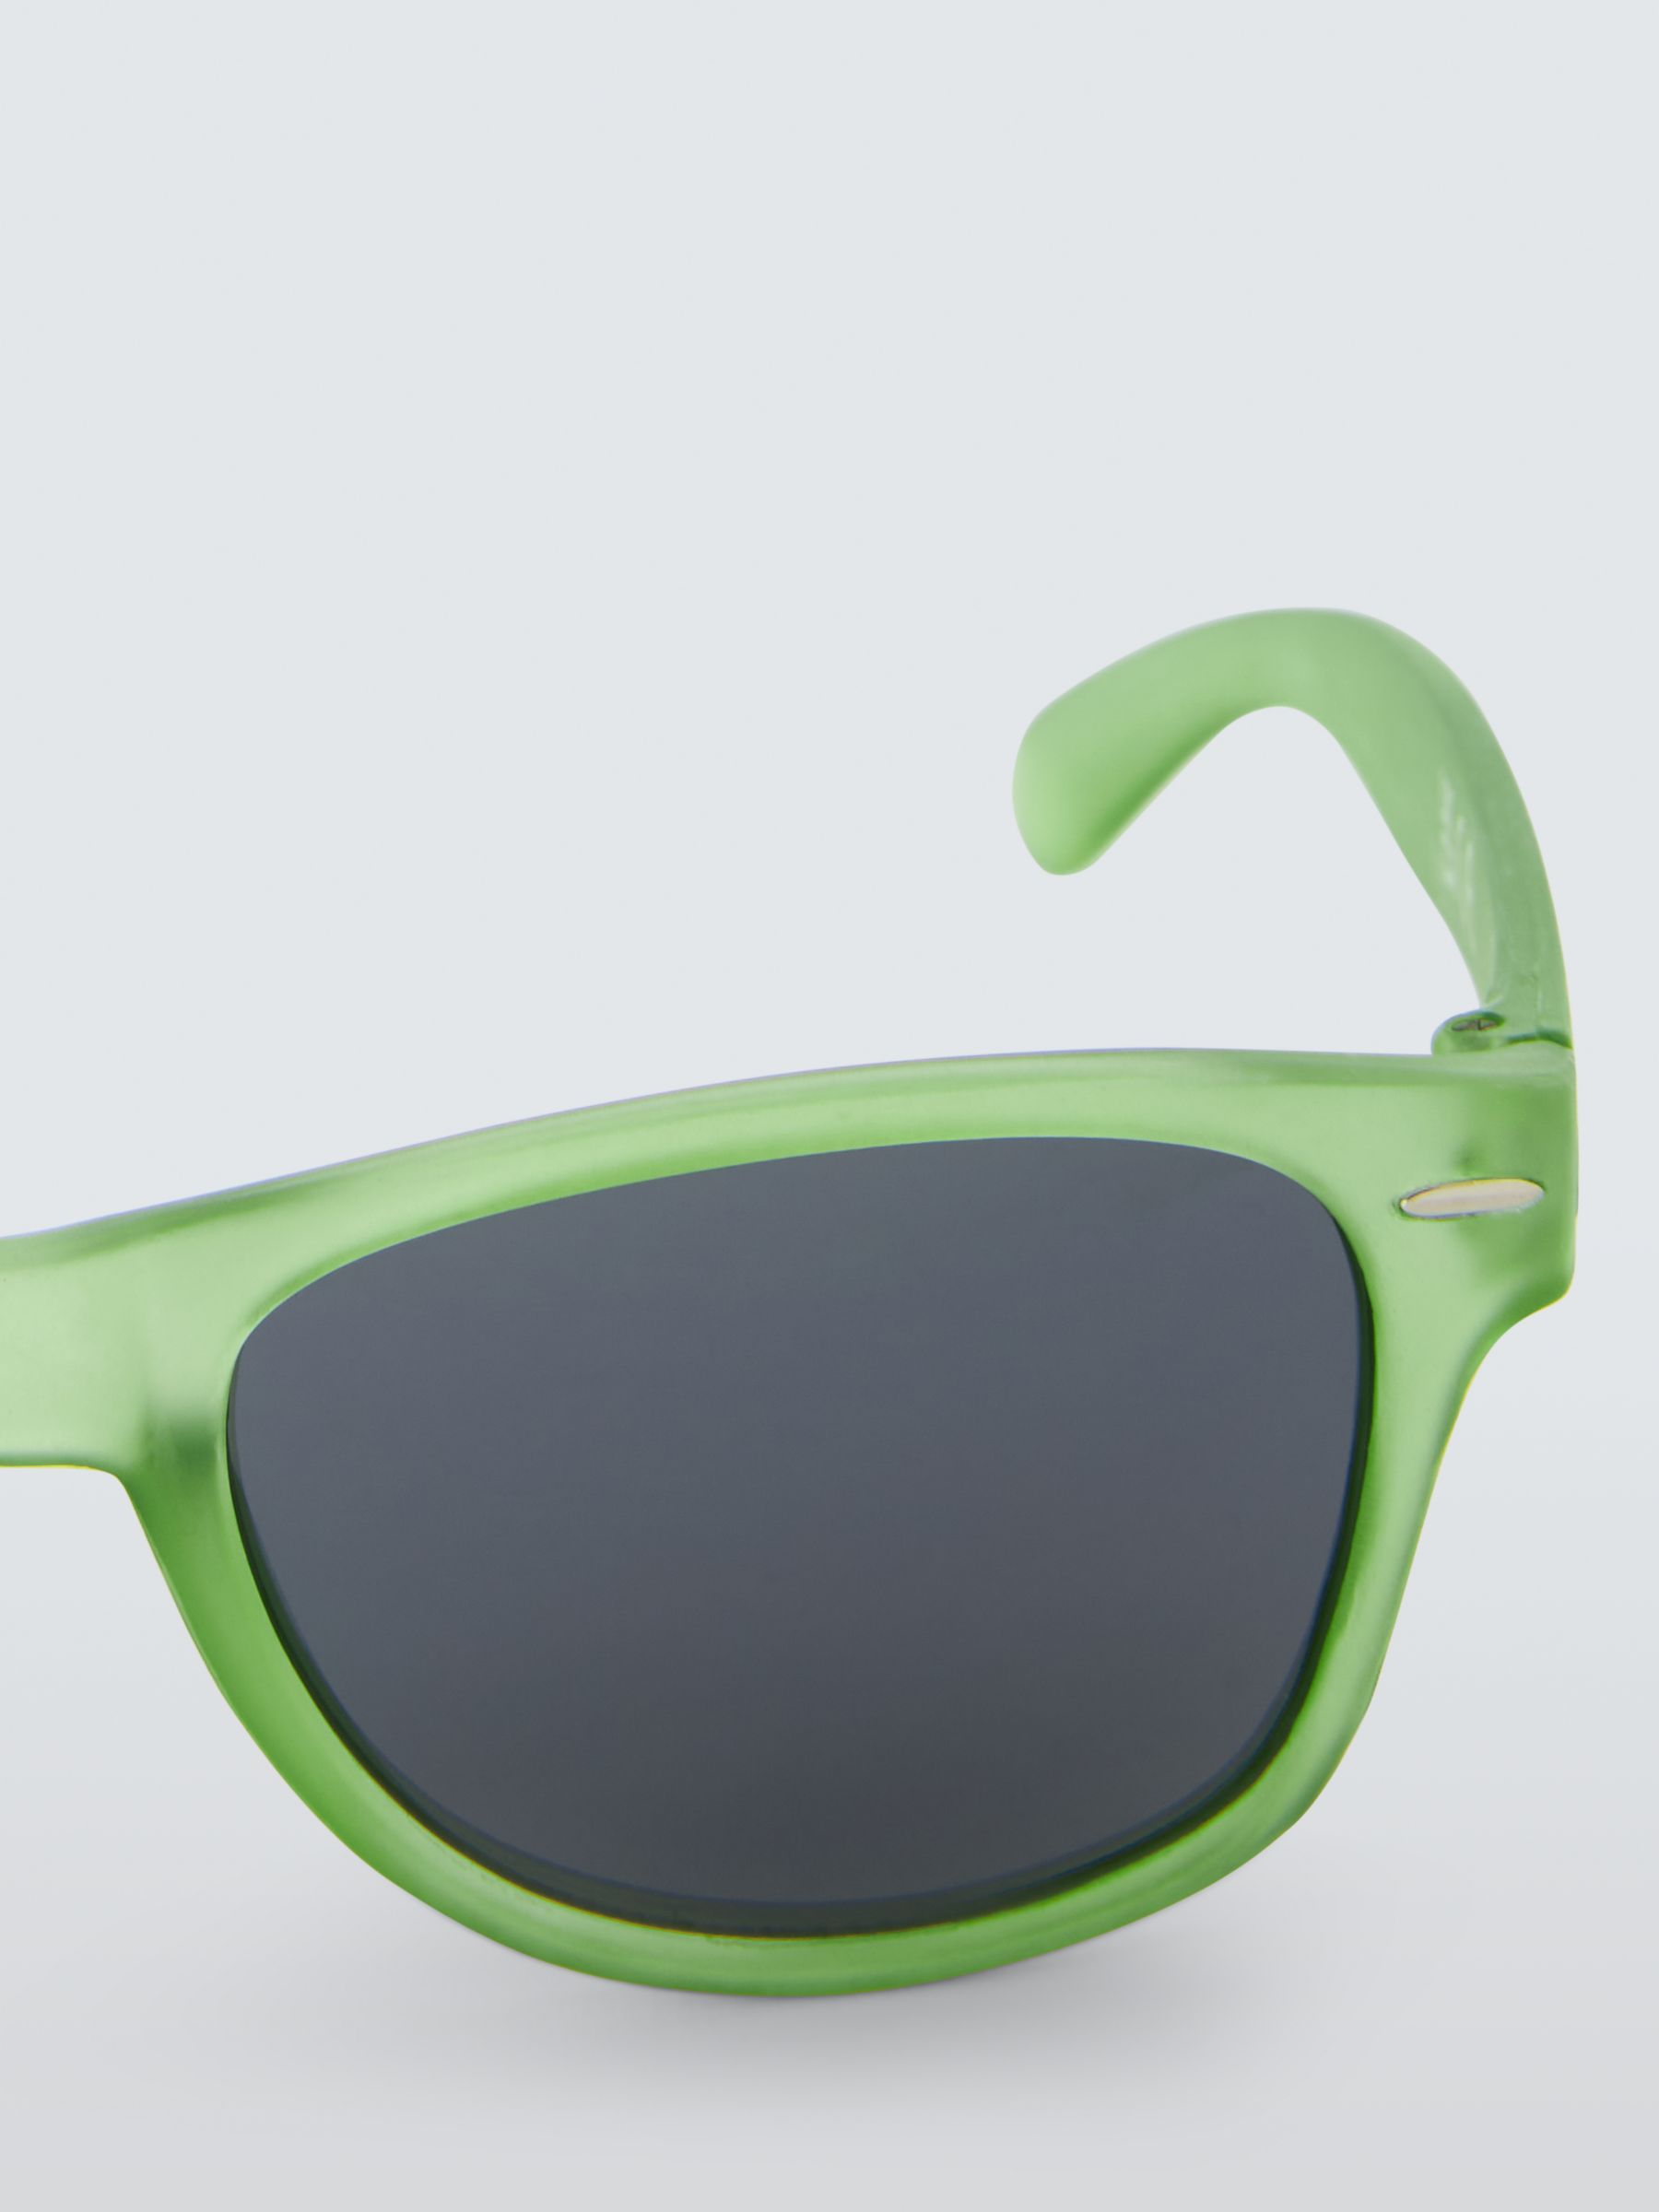 Buy John Lewis Kids' Wayfarer Sunglasses Online at johnlewis.com